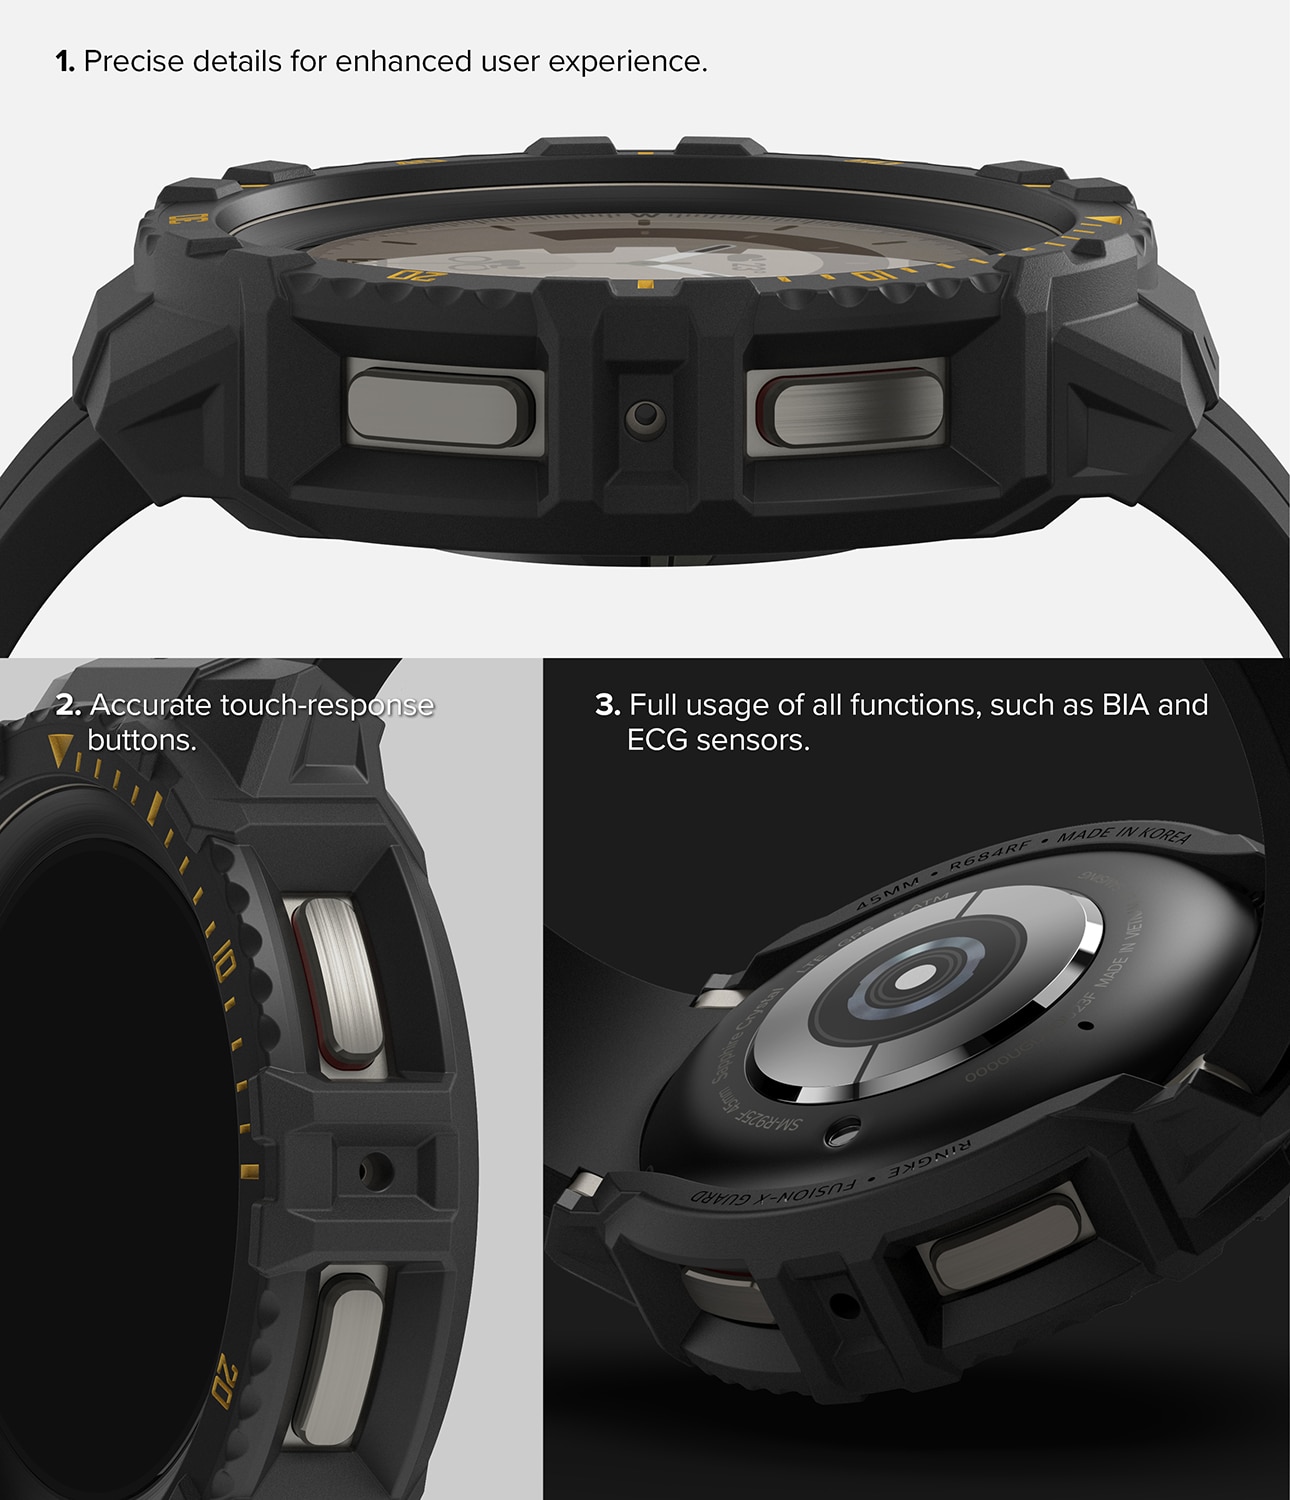 Fusion X Skal Samsung Galaxy Watch 5 Pro 45mm Black (Yellow Index)